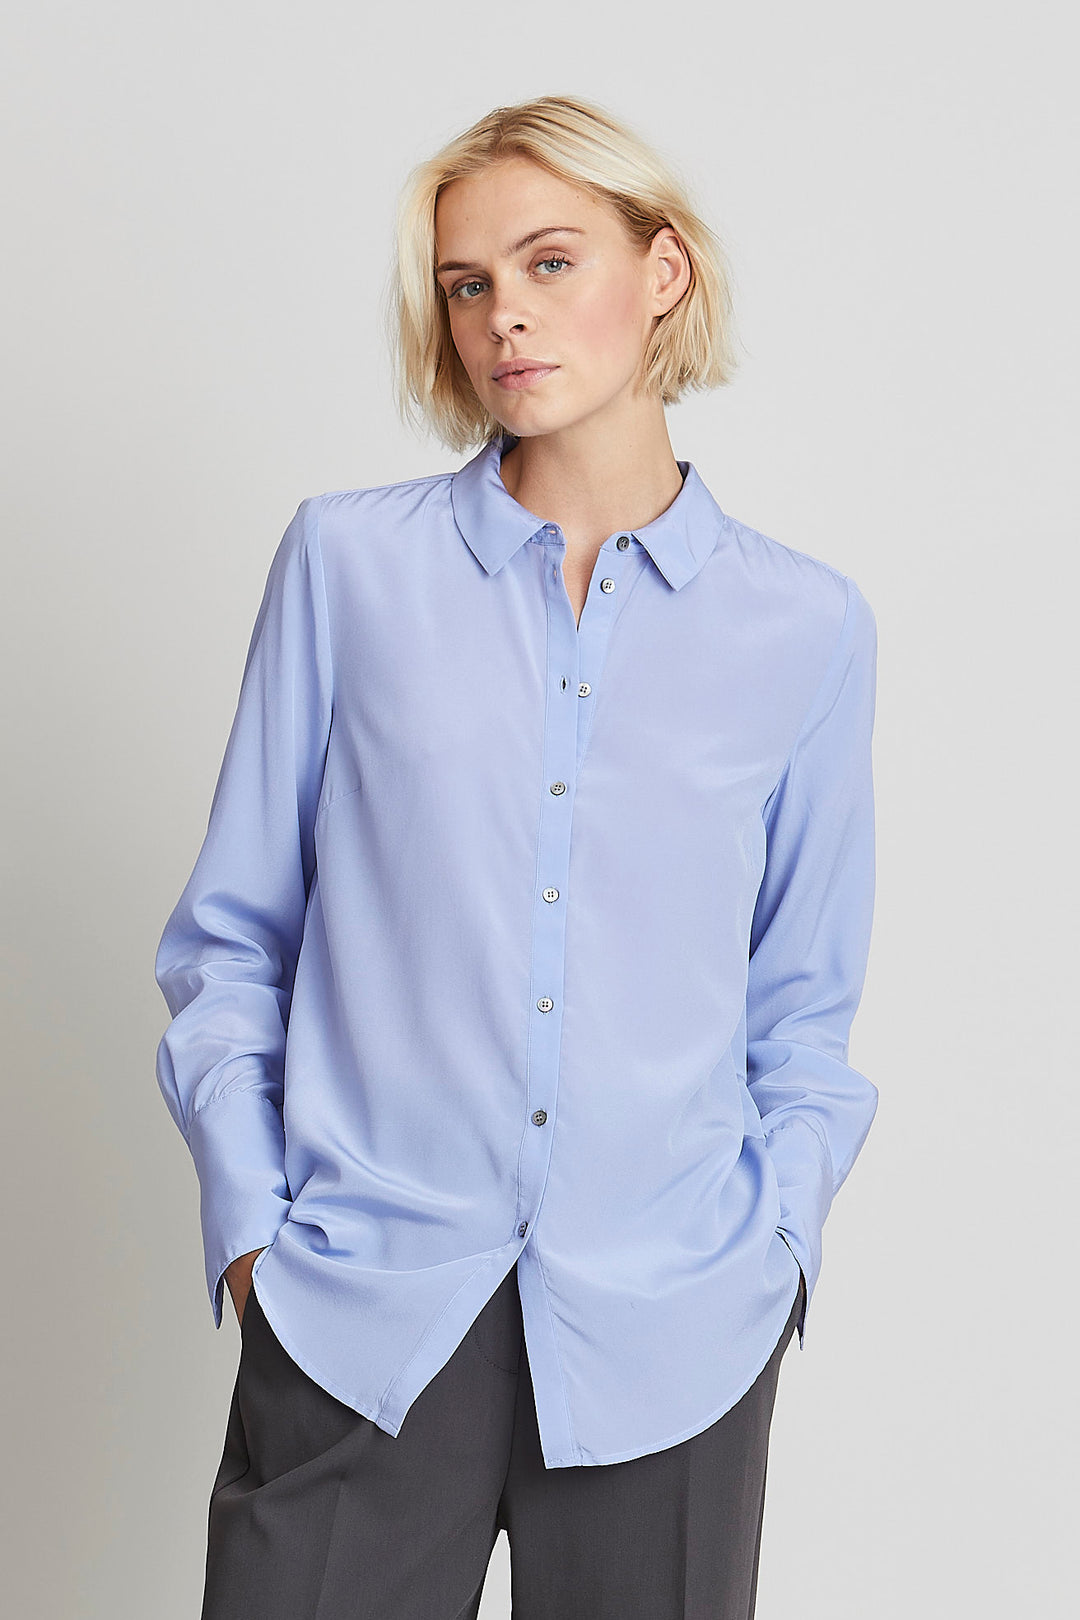 Heartmade Miri skjorte SHIRTS 277 Cornflower blue